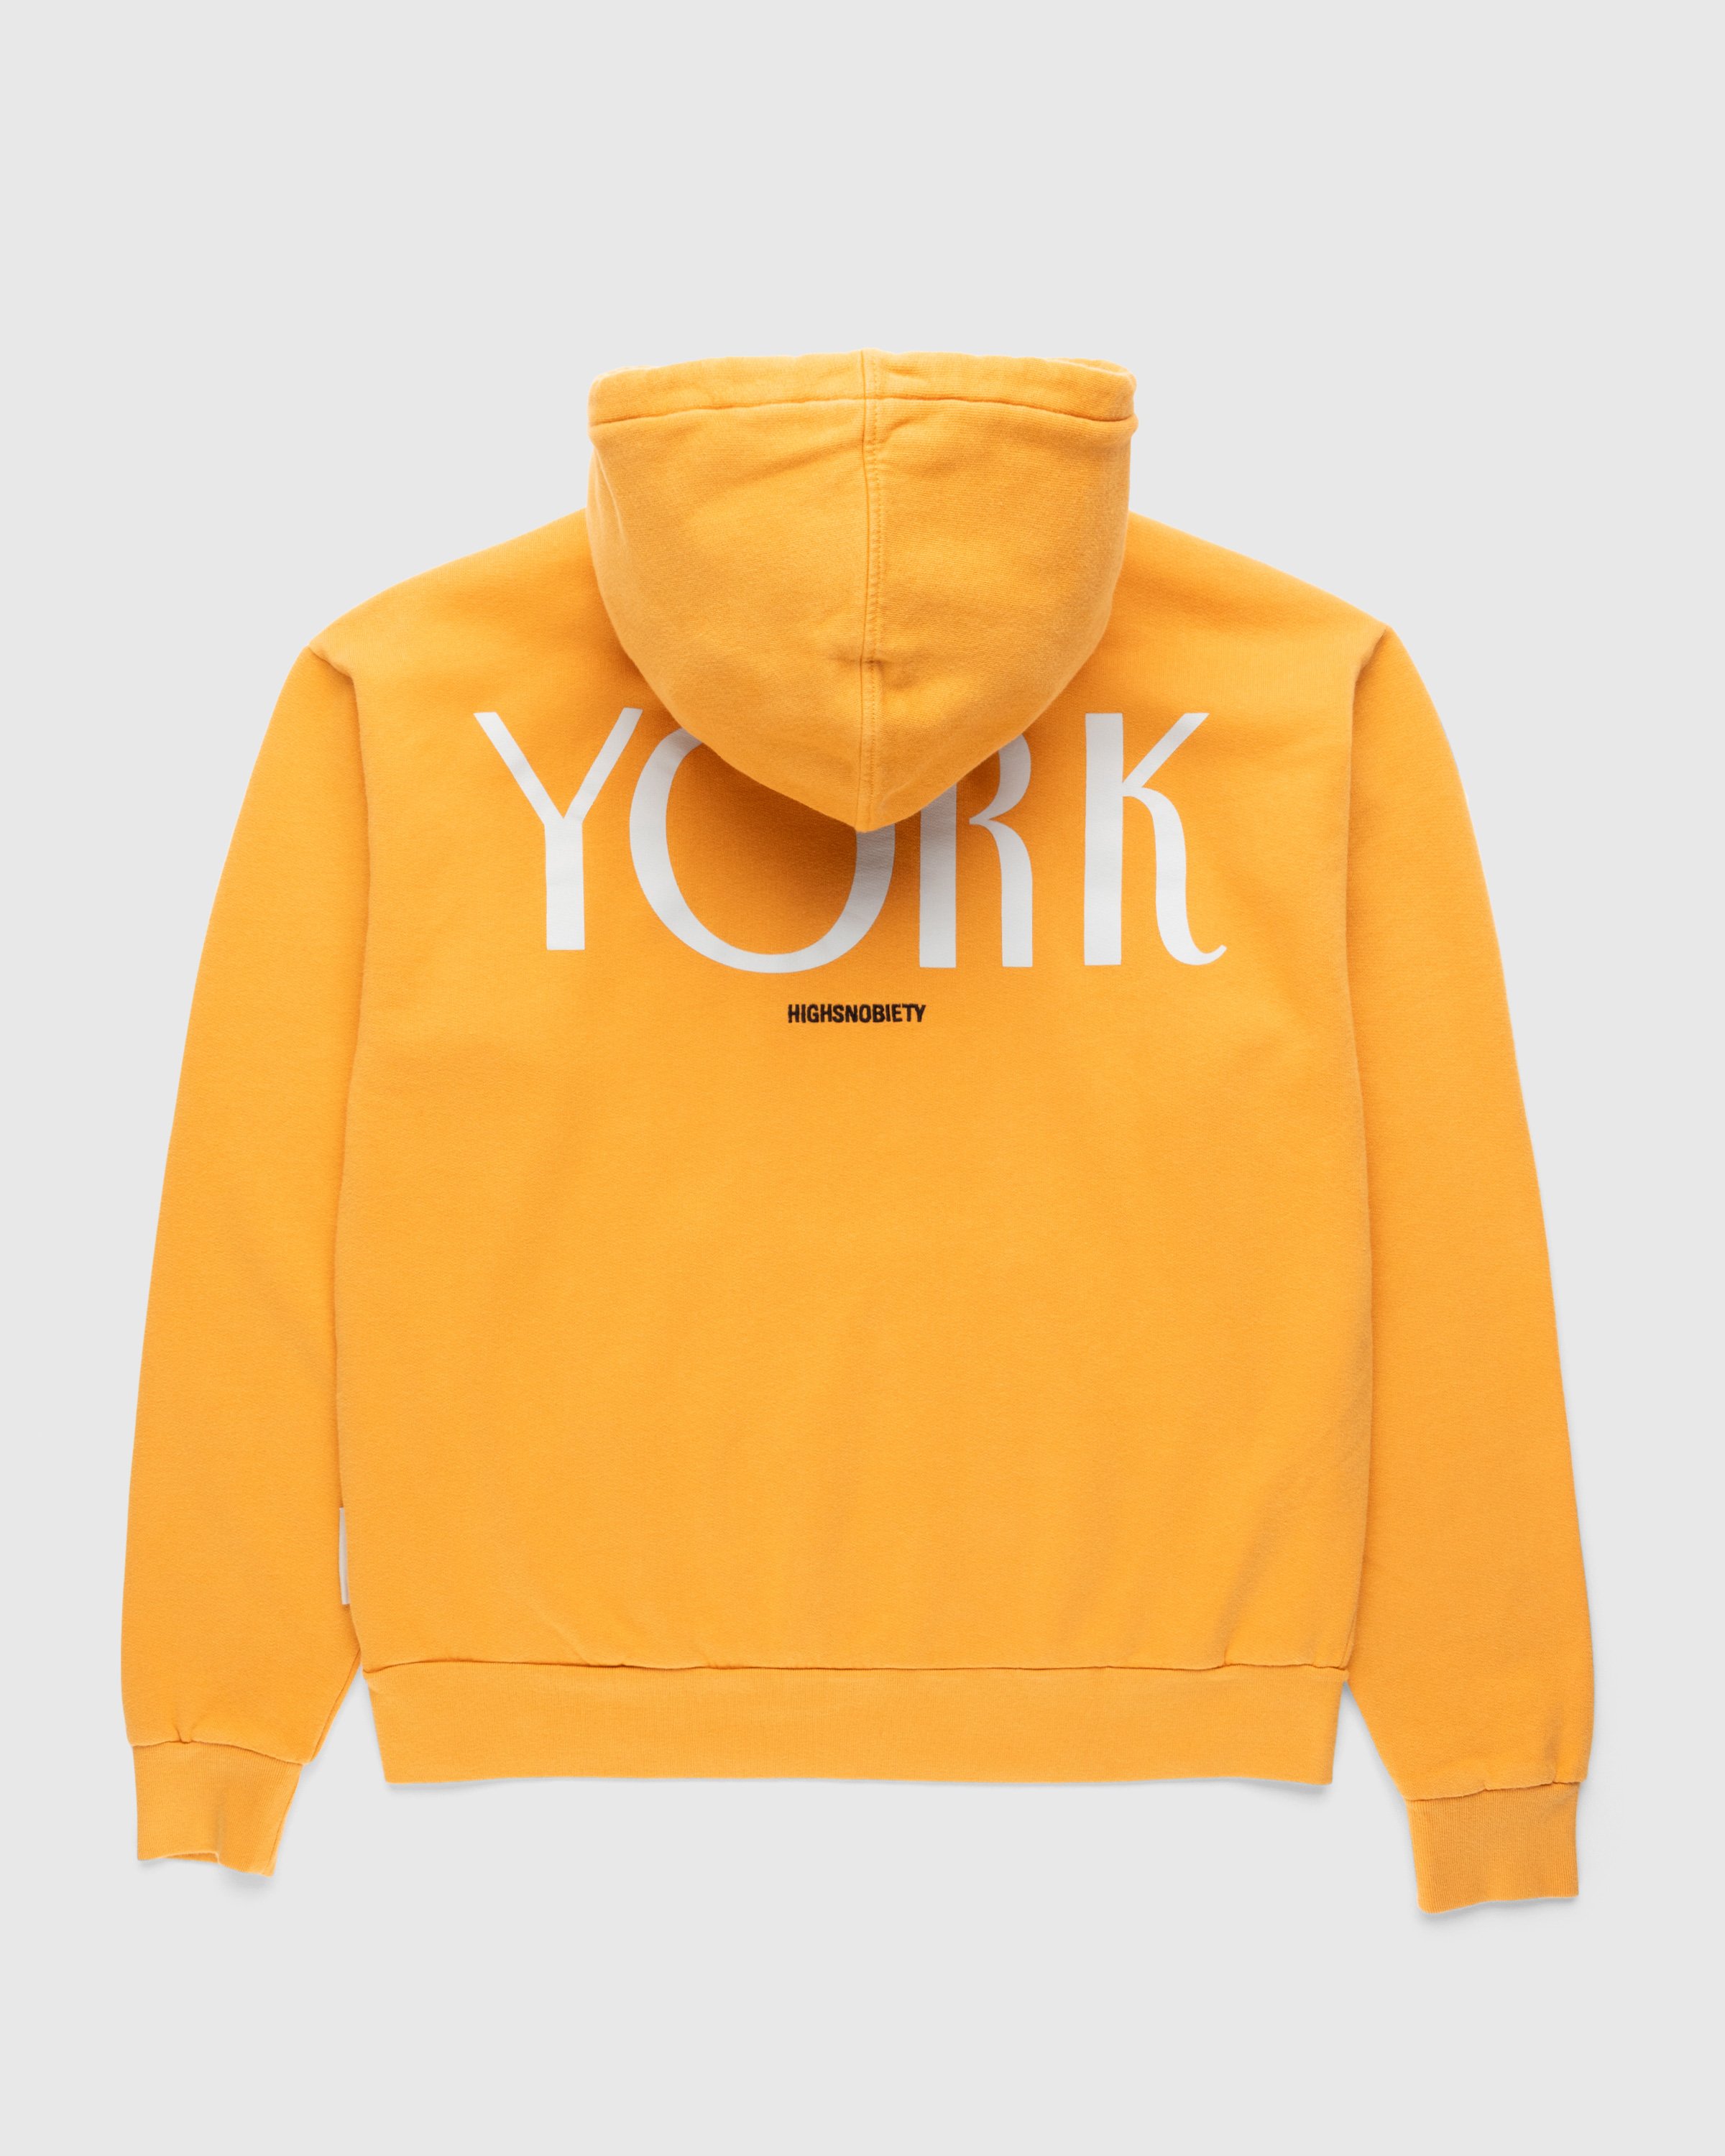 Highsnobiety - Neu York Orange Hoodie - Clothing - Orange - Image 2